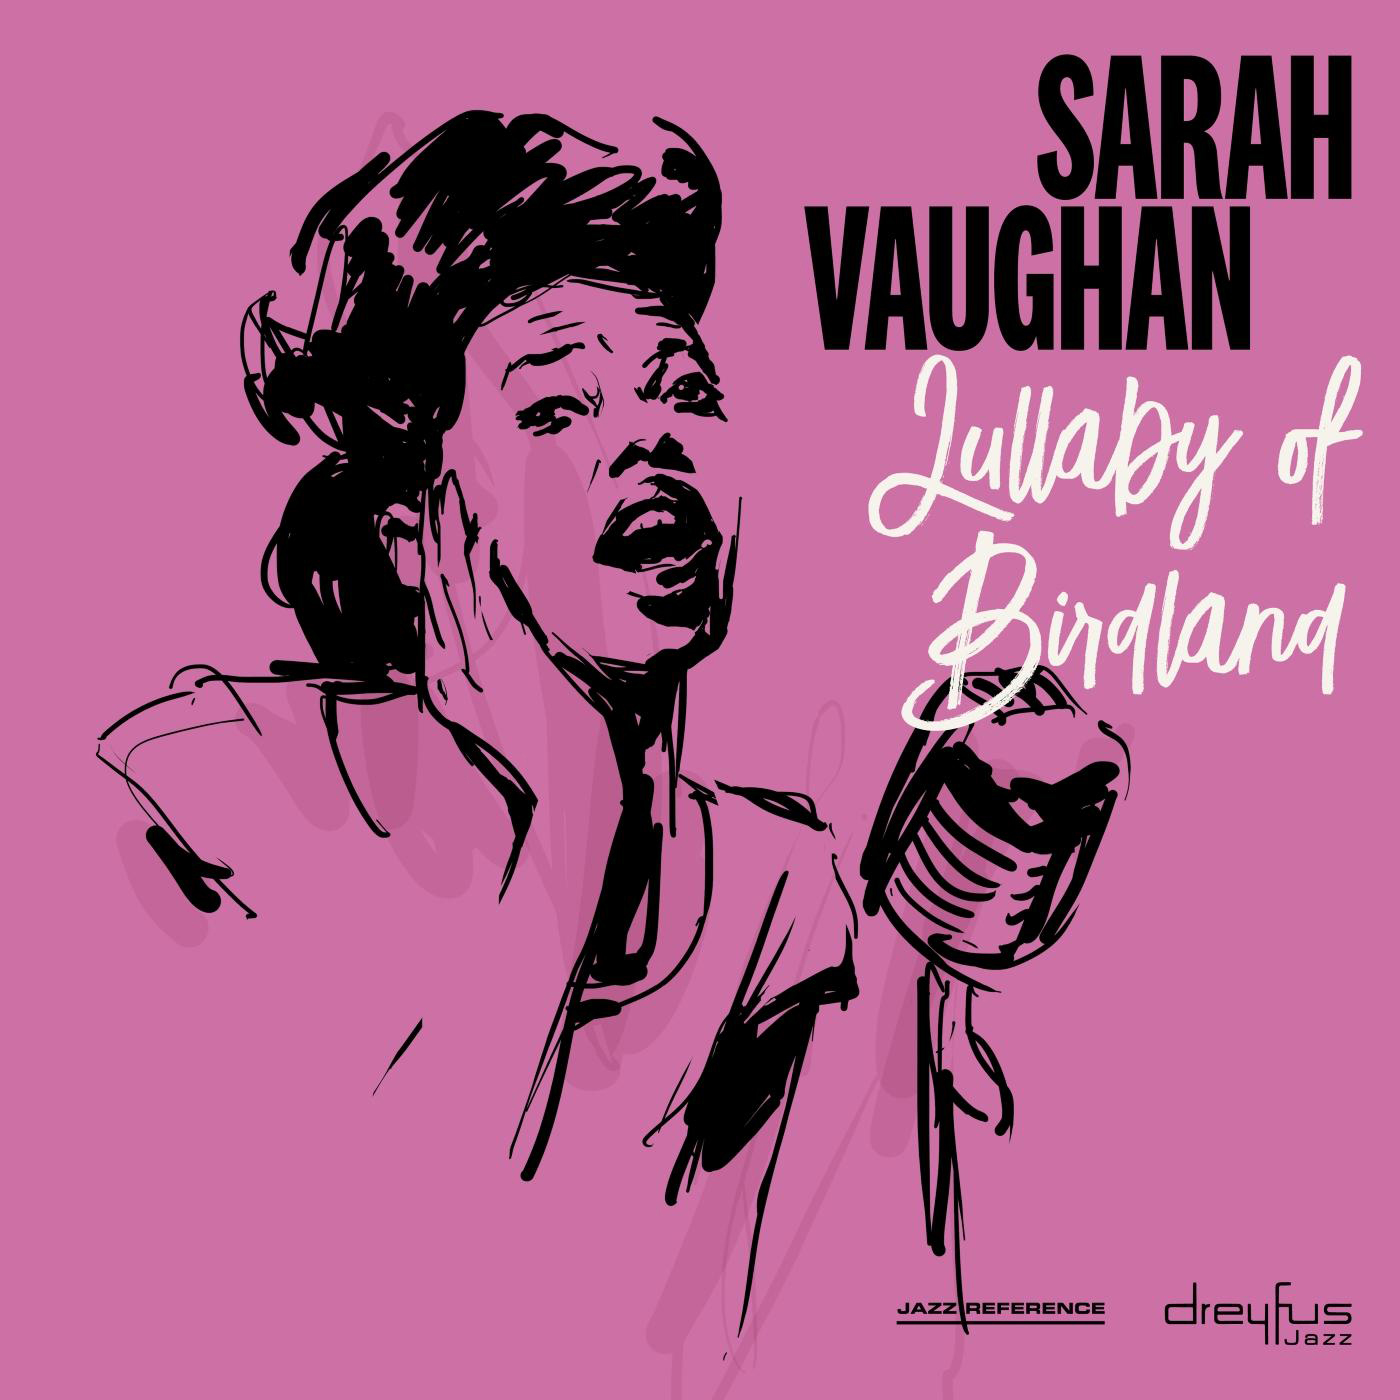 Lullaby Vaughan Birdland (Vinyl) - of Sarah -